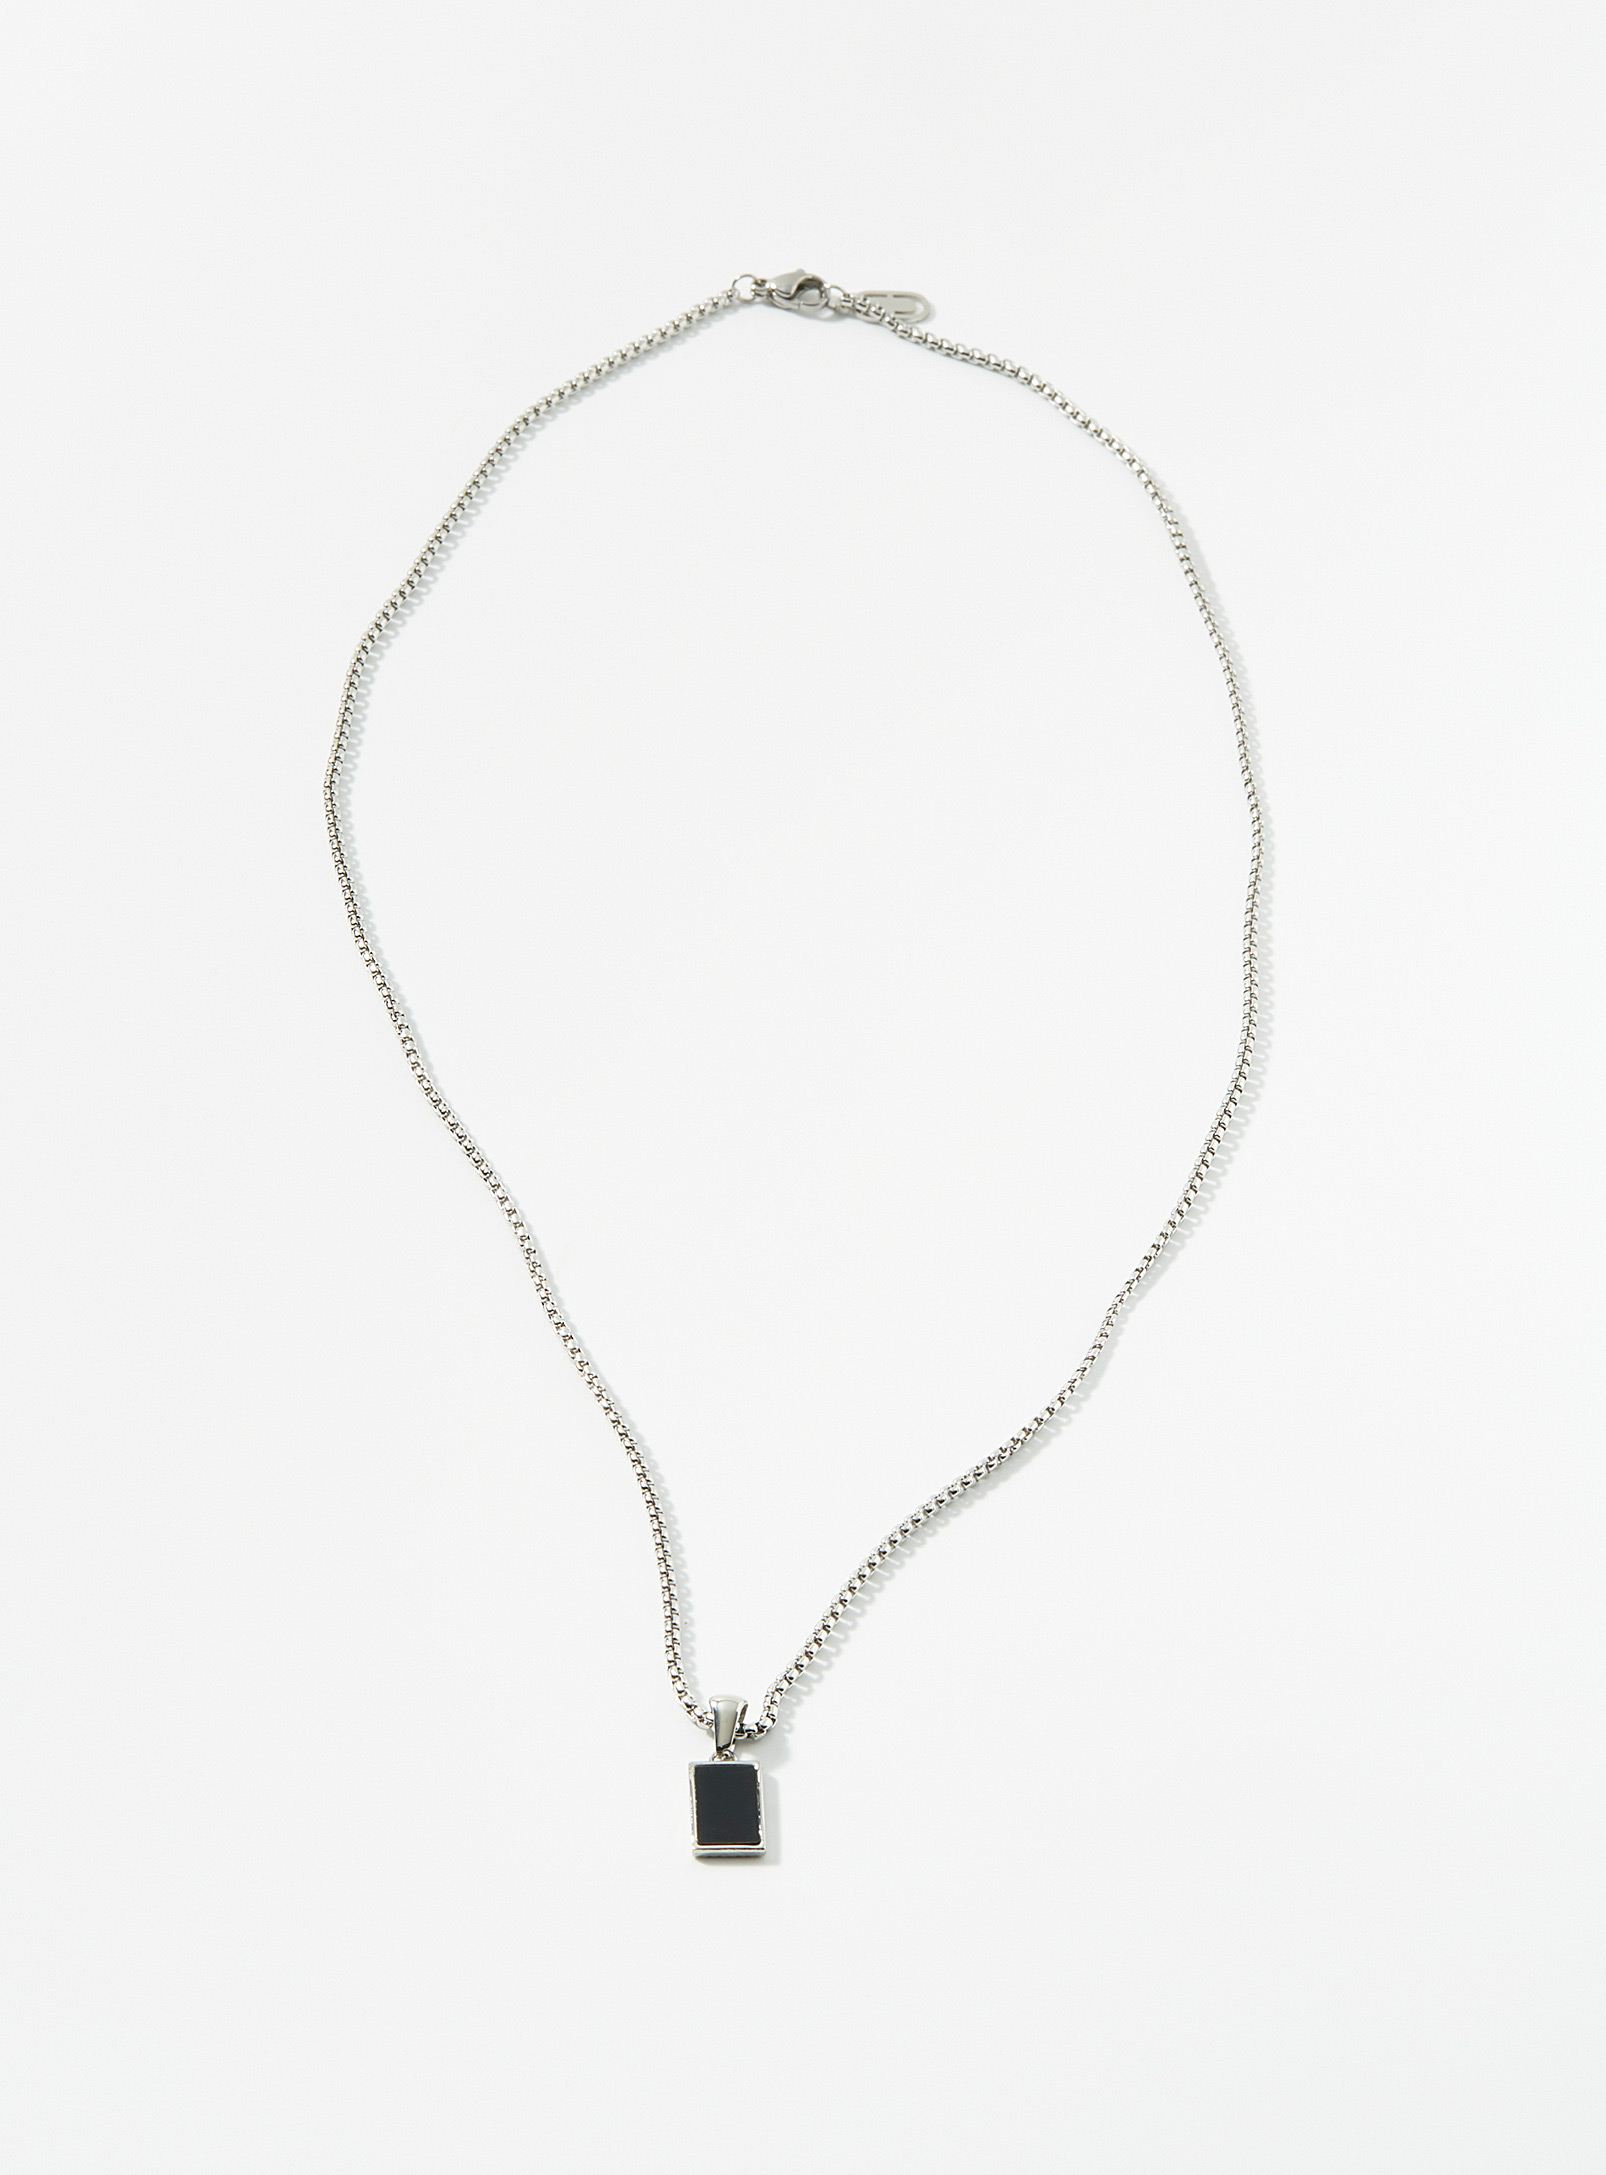 Midi34 - Men's Jacob necklace